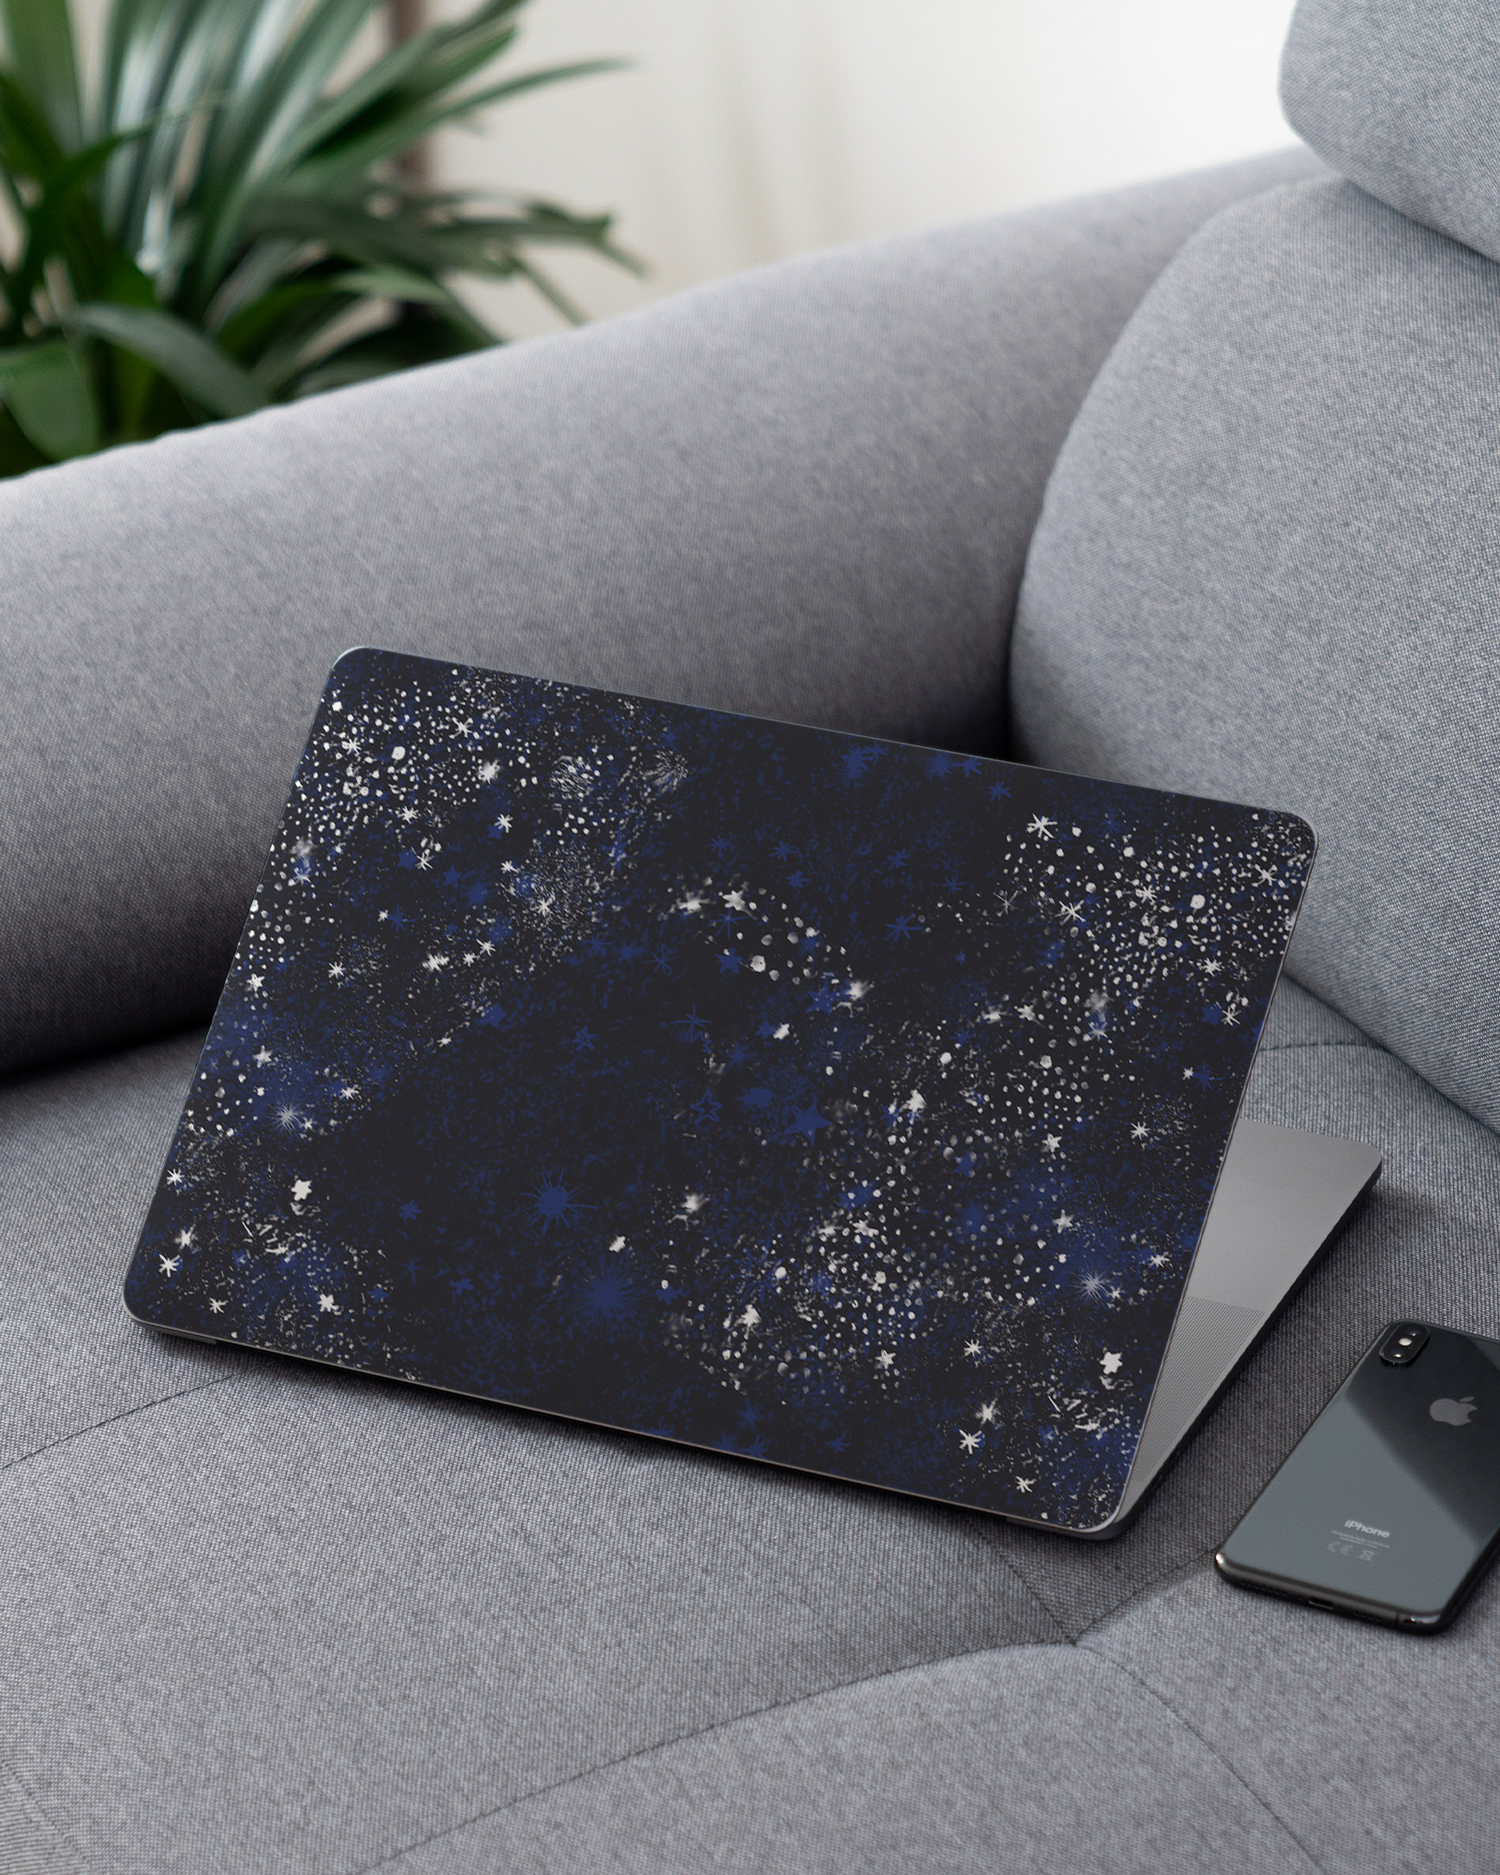 Starry Night Sky Laptop Aufkleber für 13 Zoll Apple MacBooks auf dem Sofa